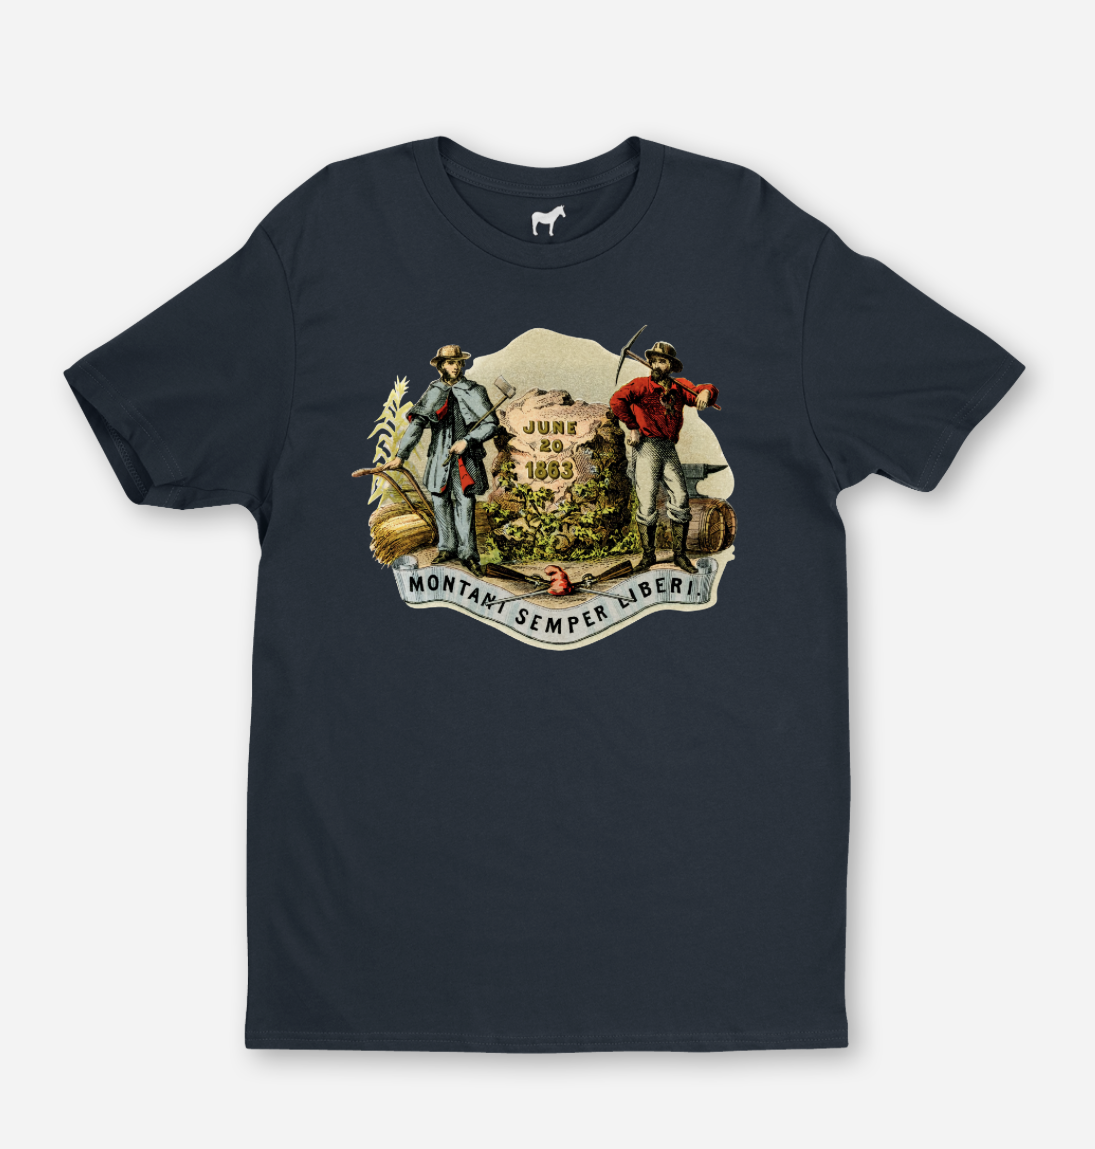 West Virginia Coat of Arms T-shirt